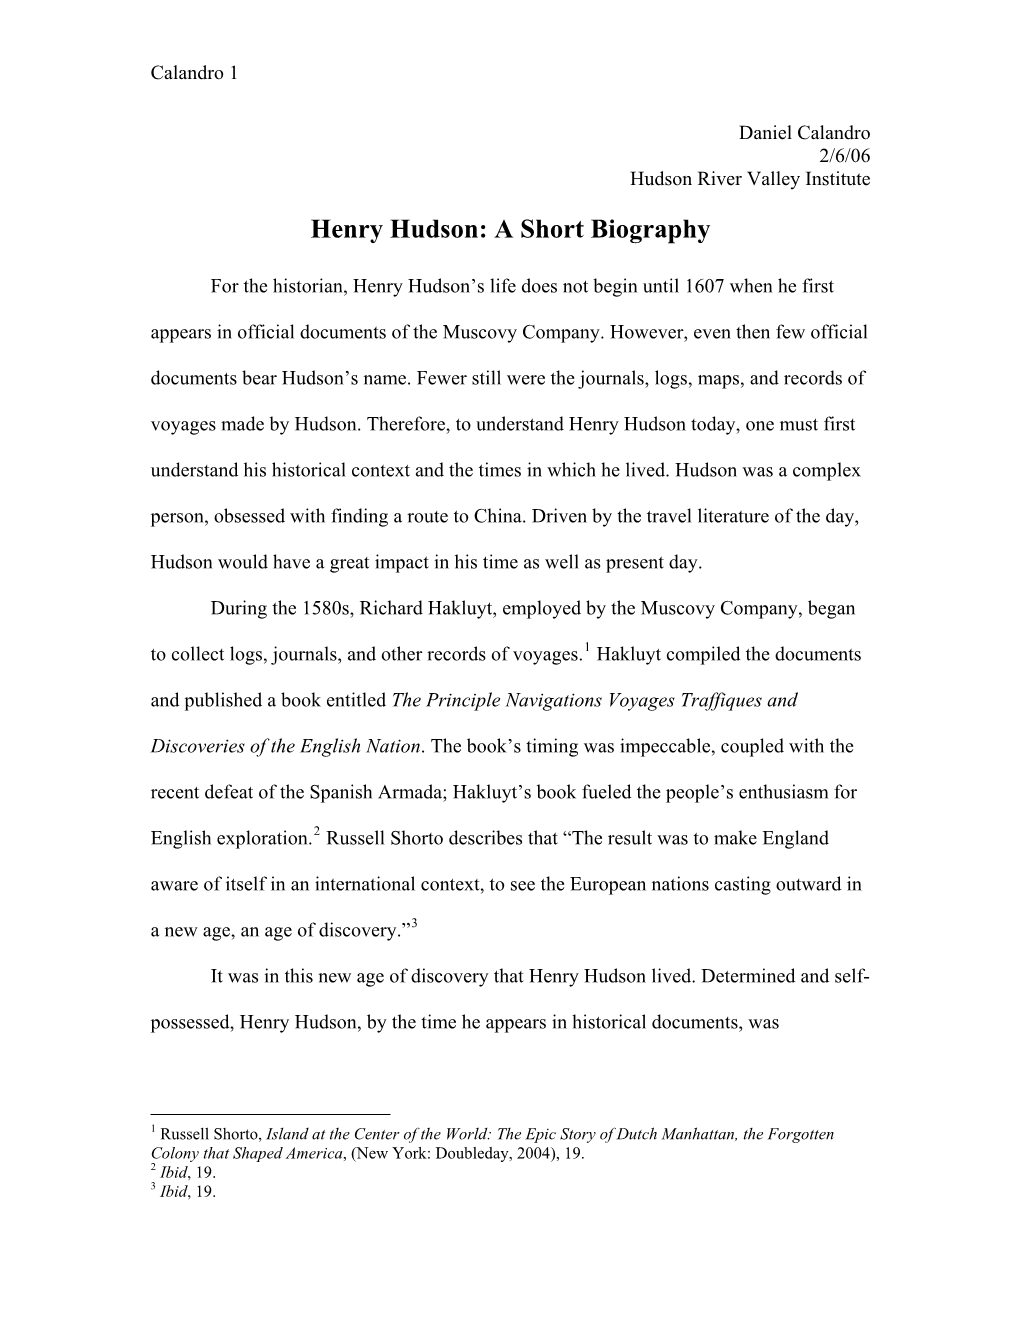 Henry Hudson: a Short Biography